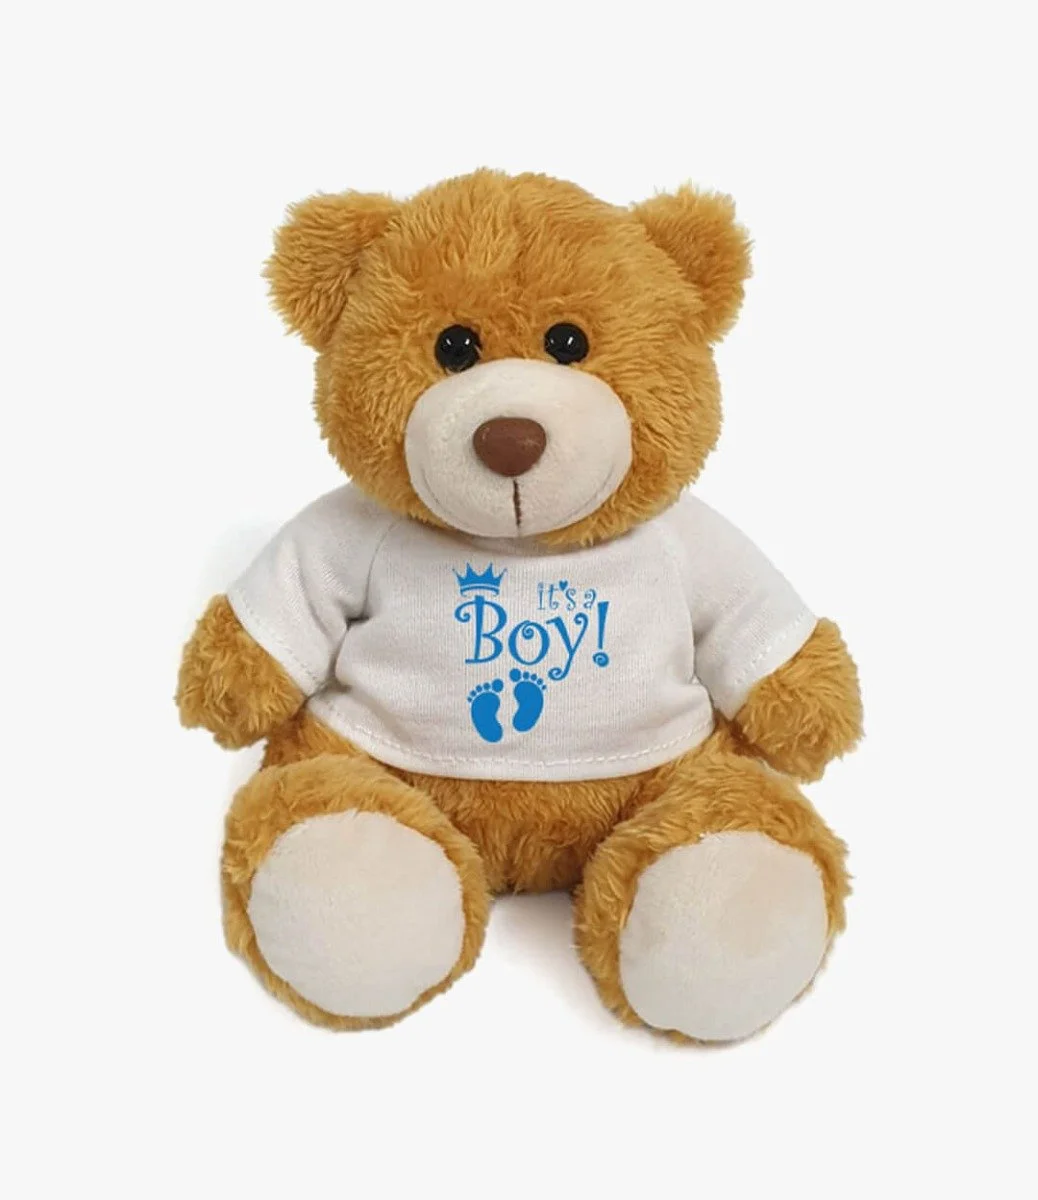 Golden Teddy Bear in White Shirt "It's A Boy" by Fay Lawson